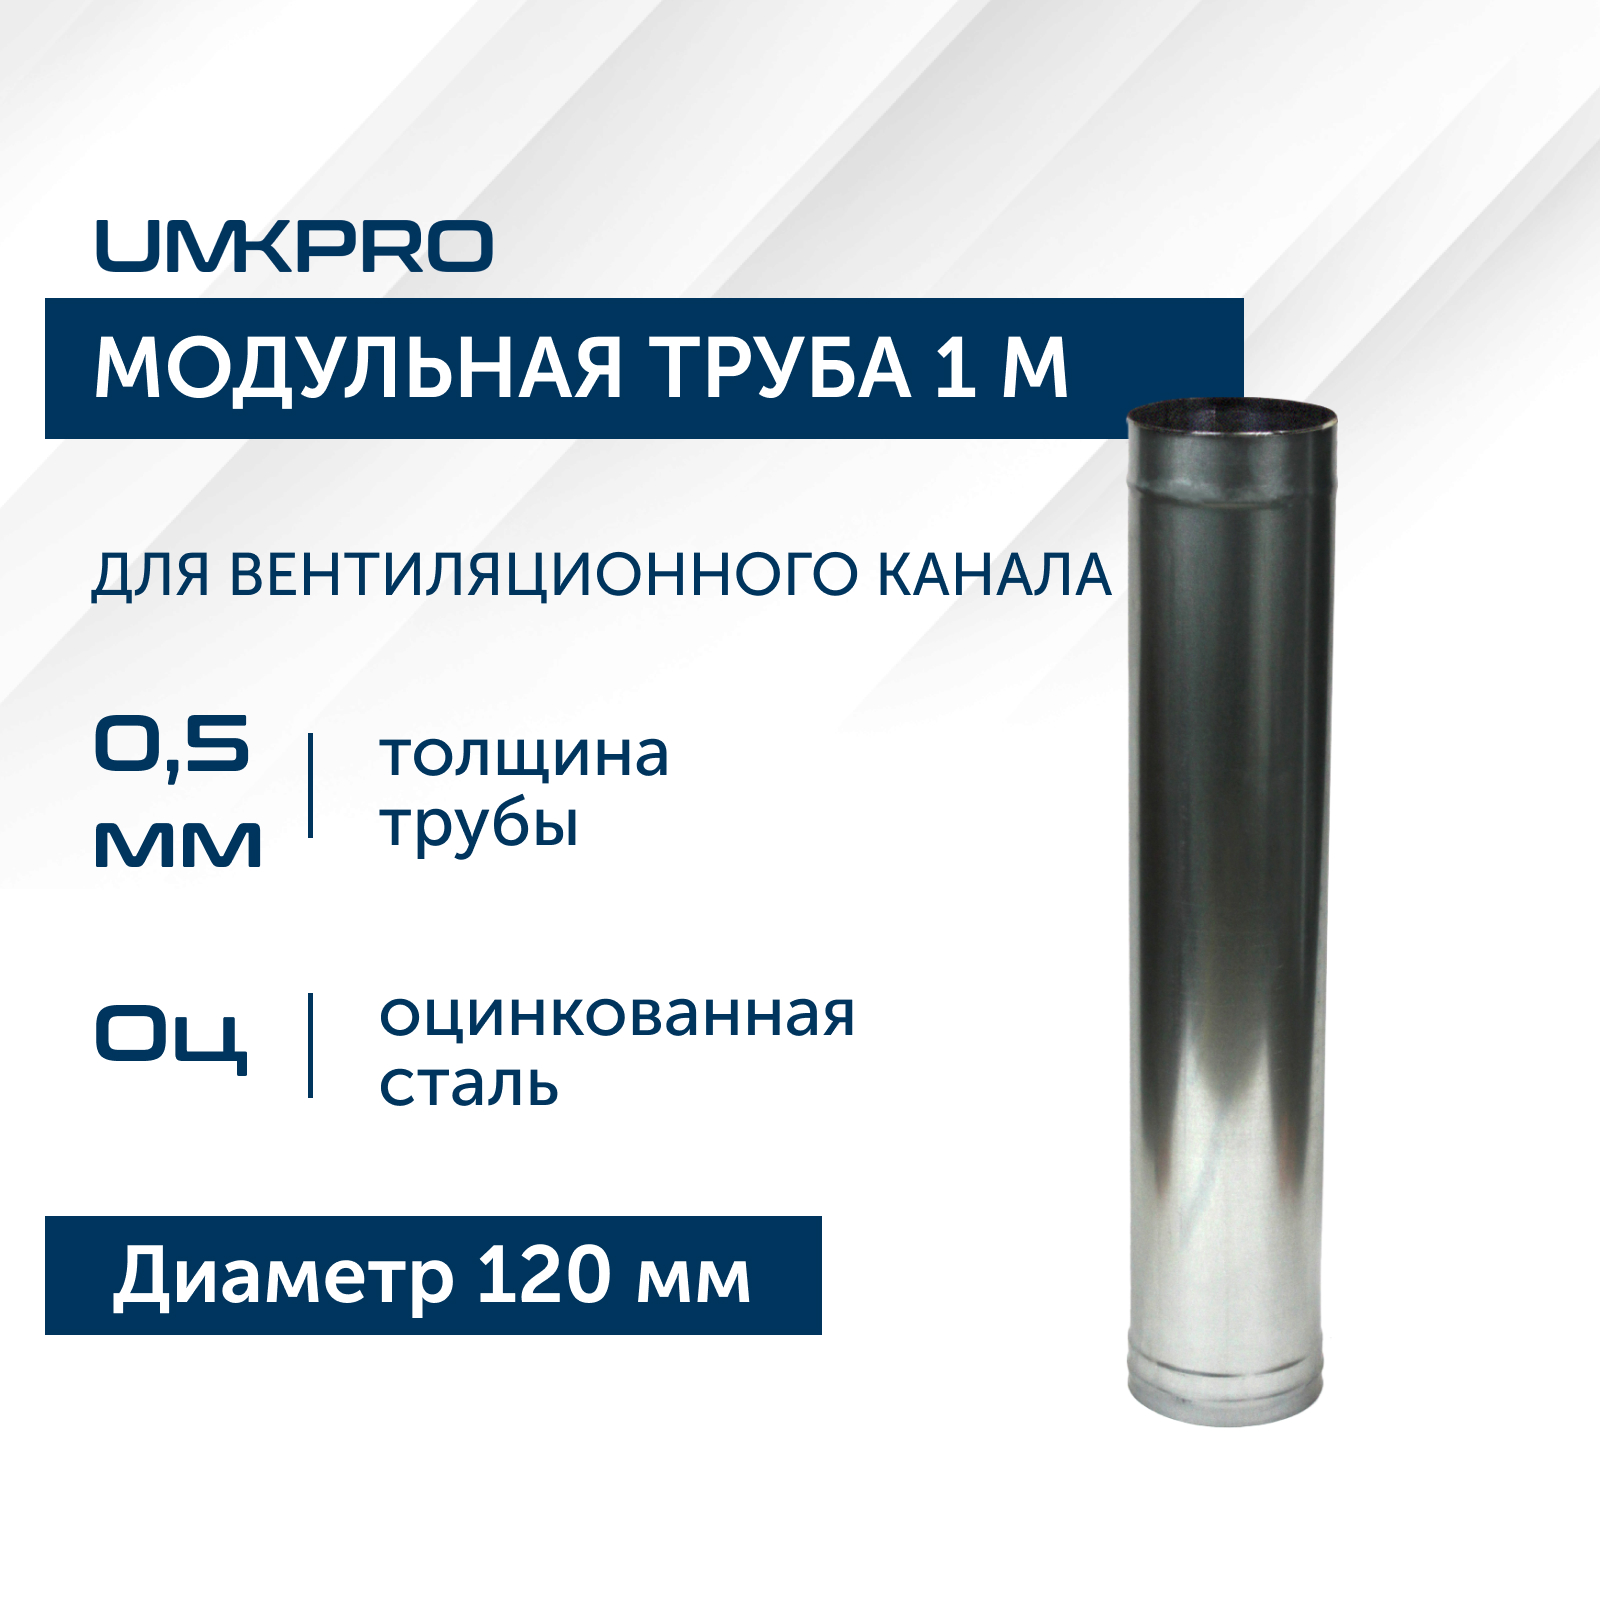 Труба модульная для дымохода 1 м UMKPRO D 120, Оц/0,5мм модульная прихожая гарун комплектация 6